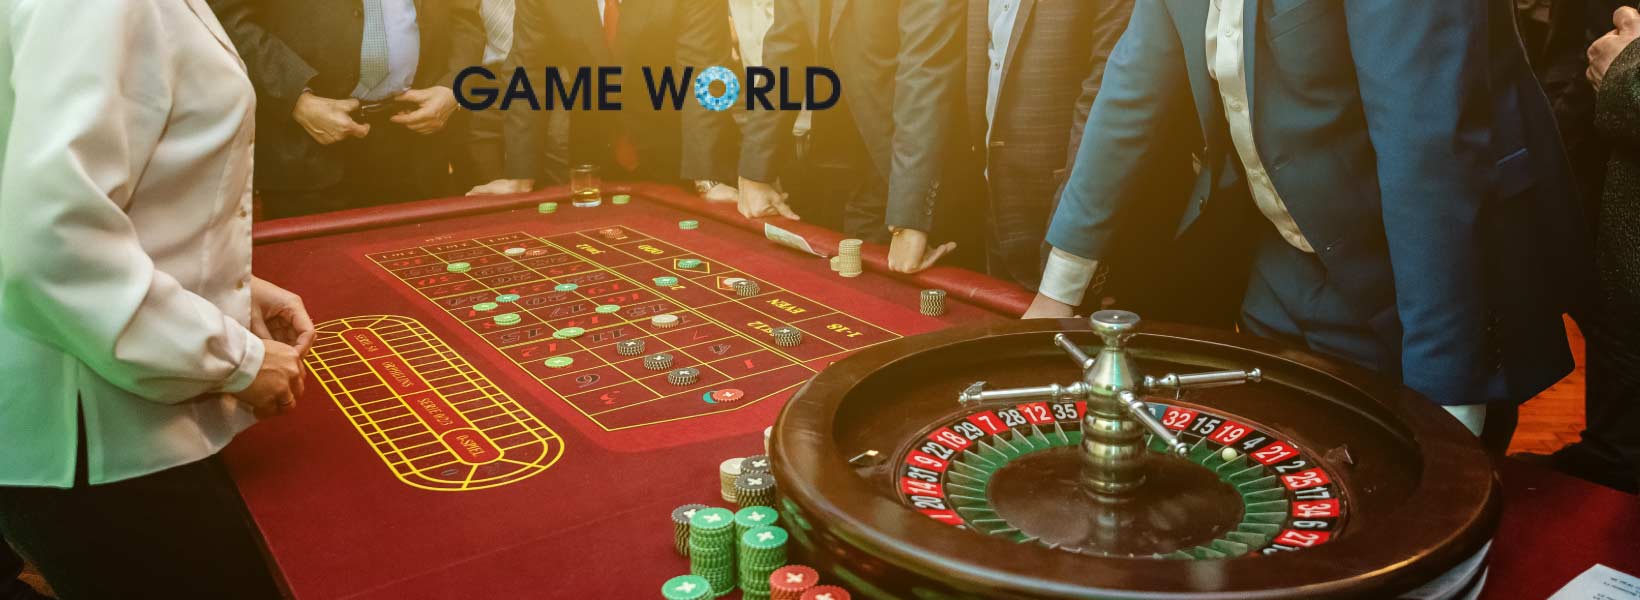 banner game world live casino